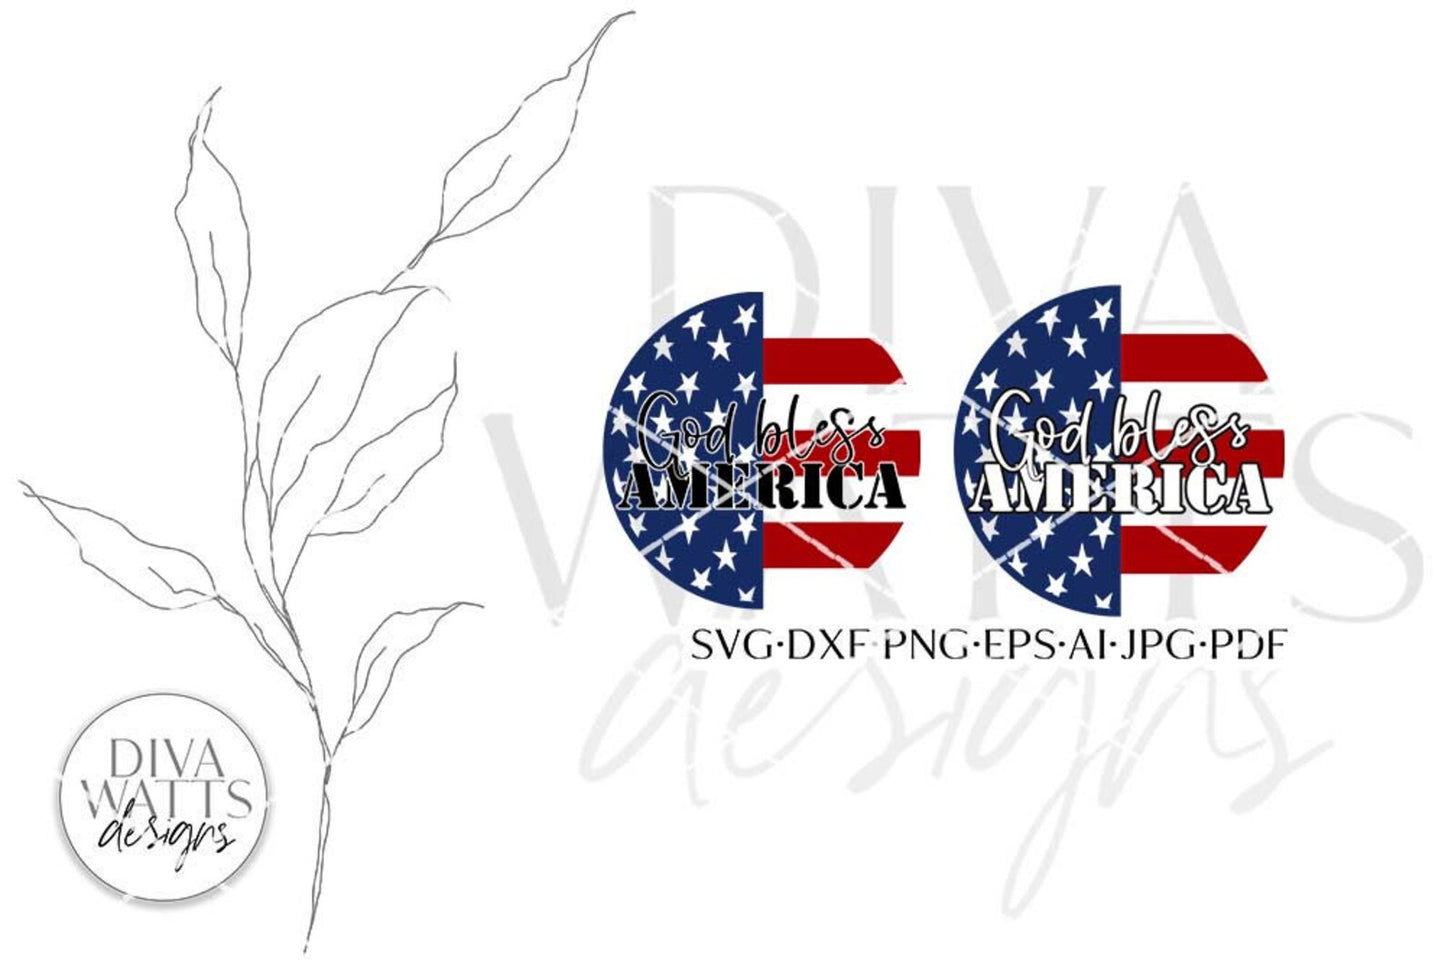 God Bless America SVG | 4th of July Design